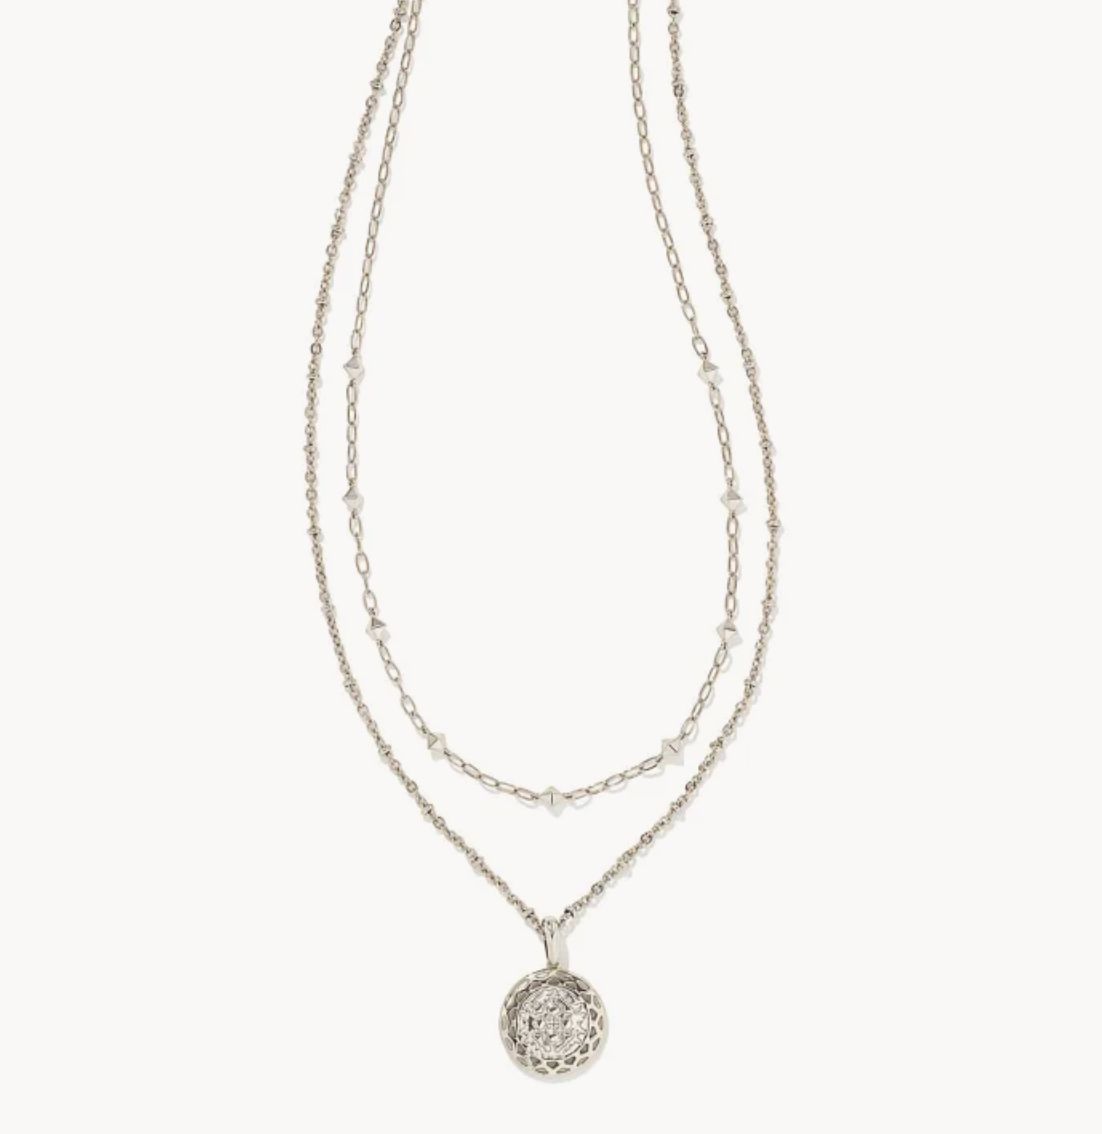 Kendra Scott Harper Multi Strand Necklace in Silver